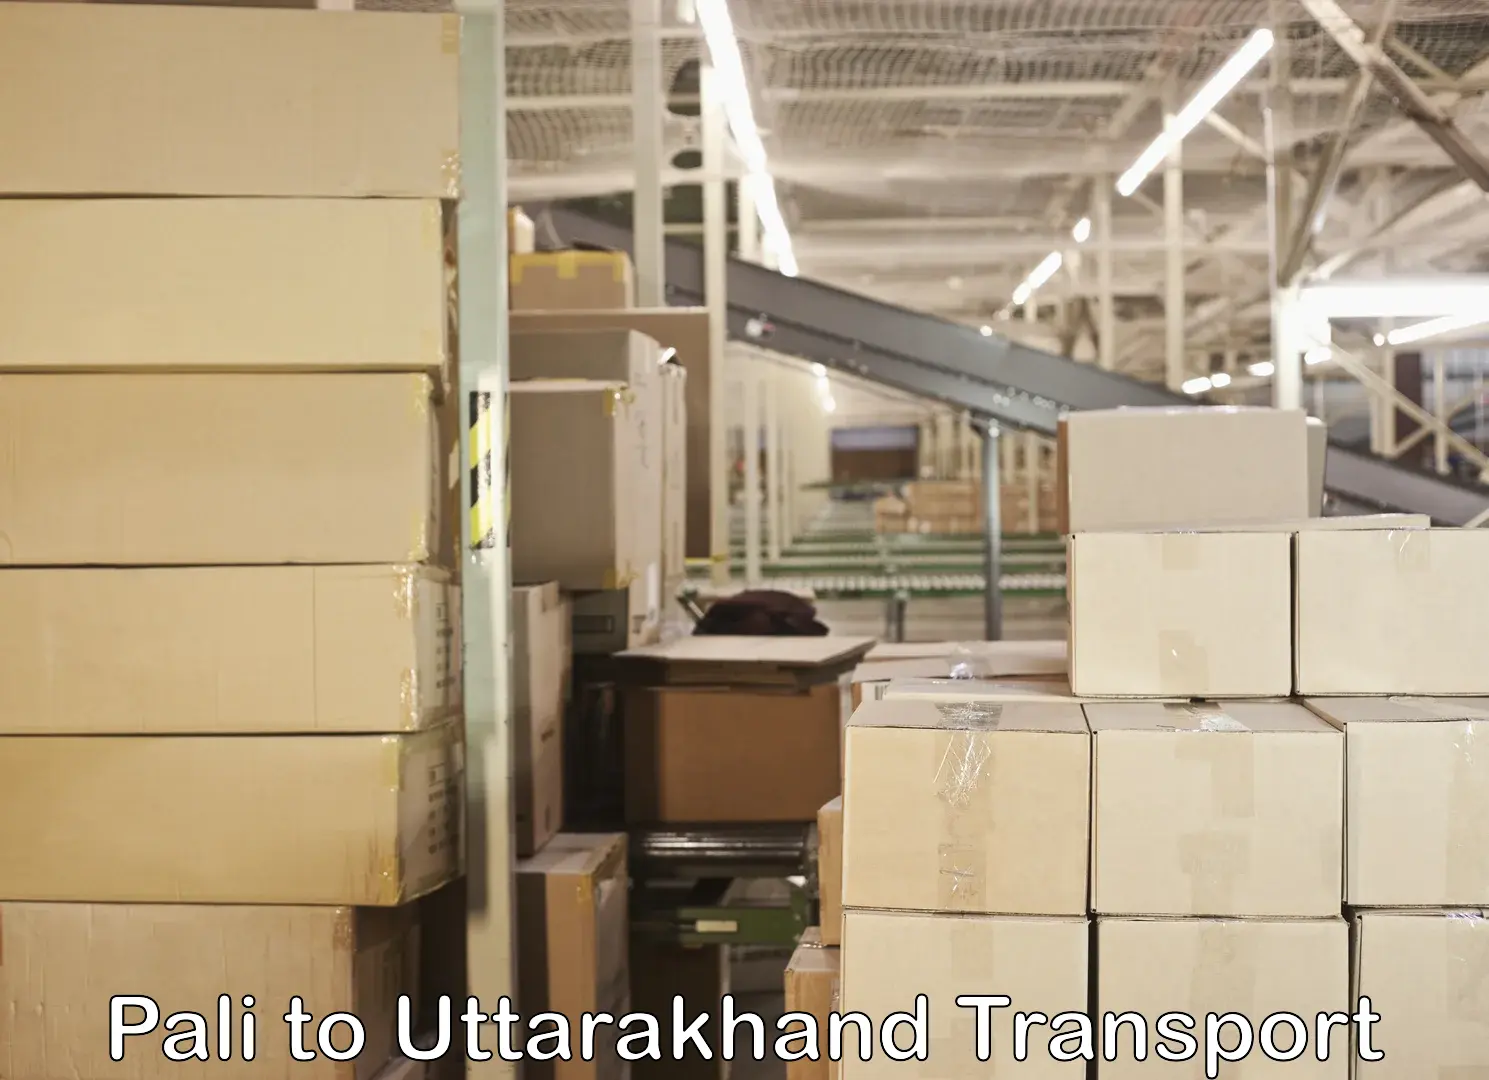 Truck transport companies in India Pali to Uttarakhand